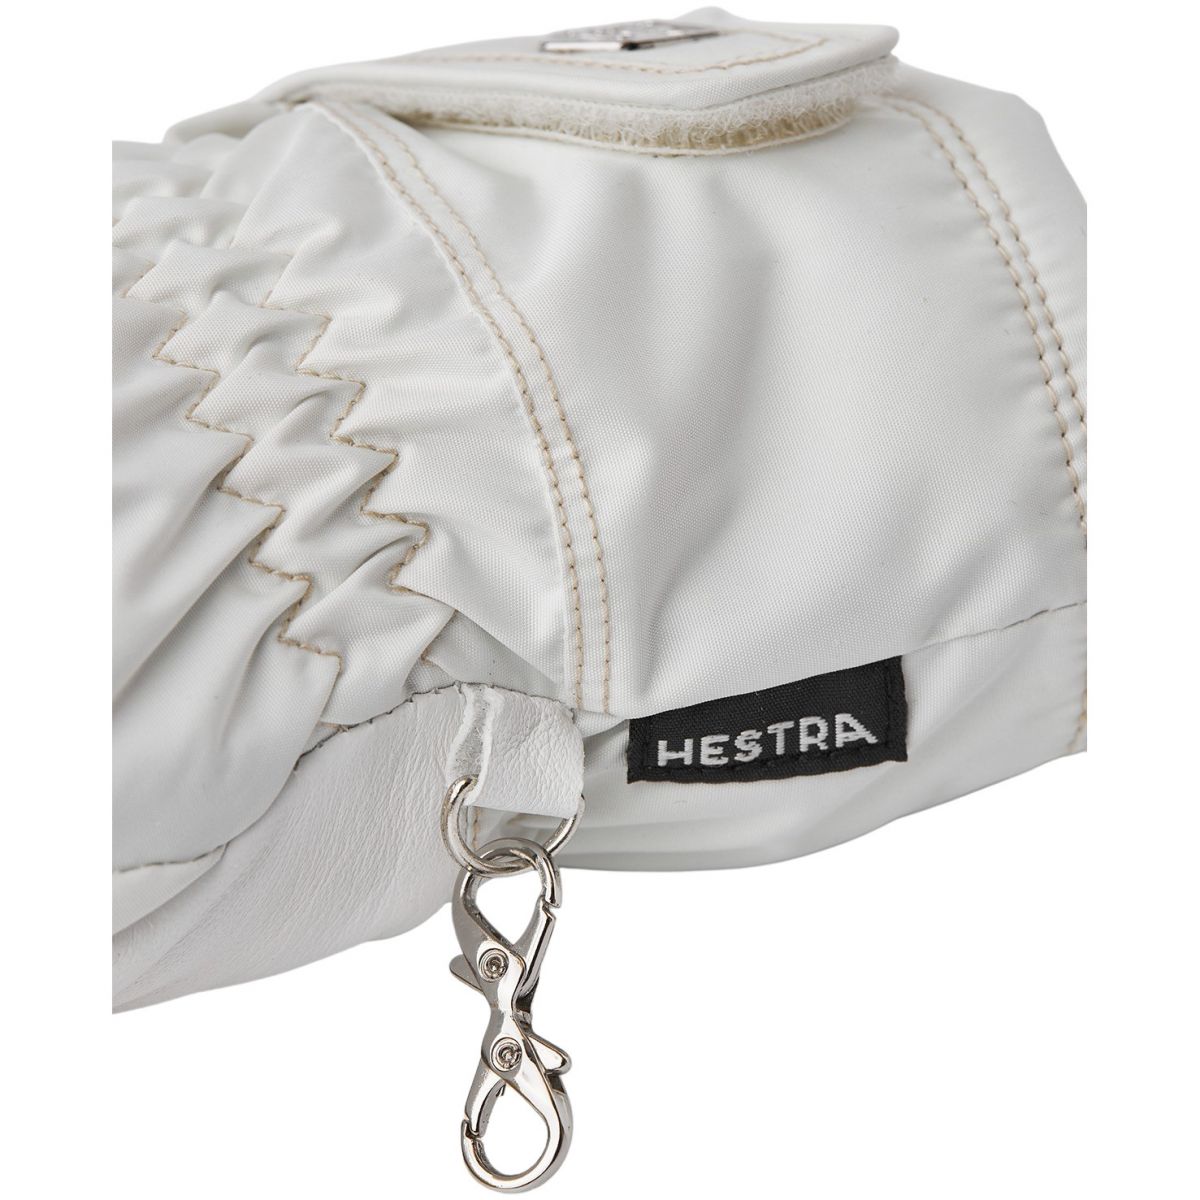 Hestra Primaloft Leather, skihandschoenen dames, wit/wit